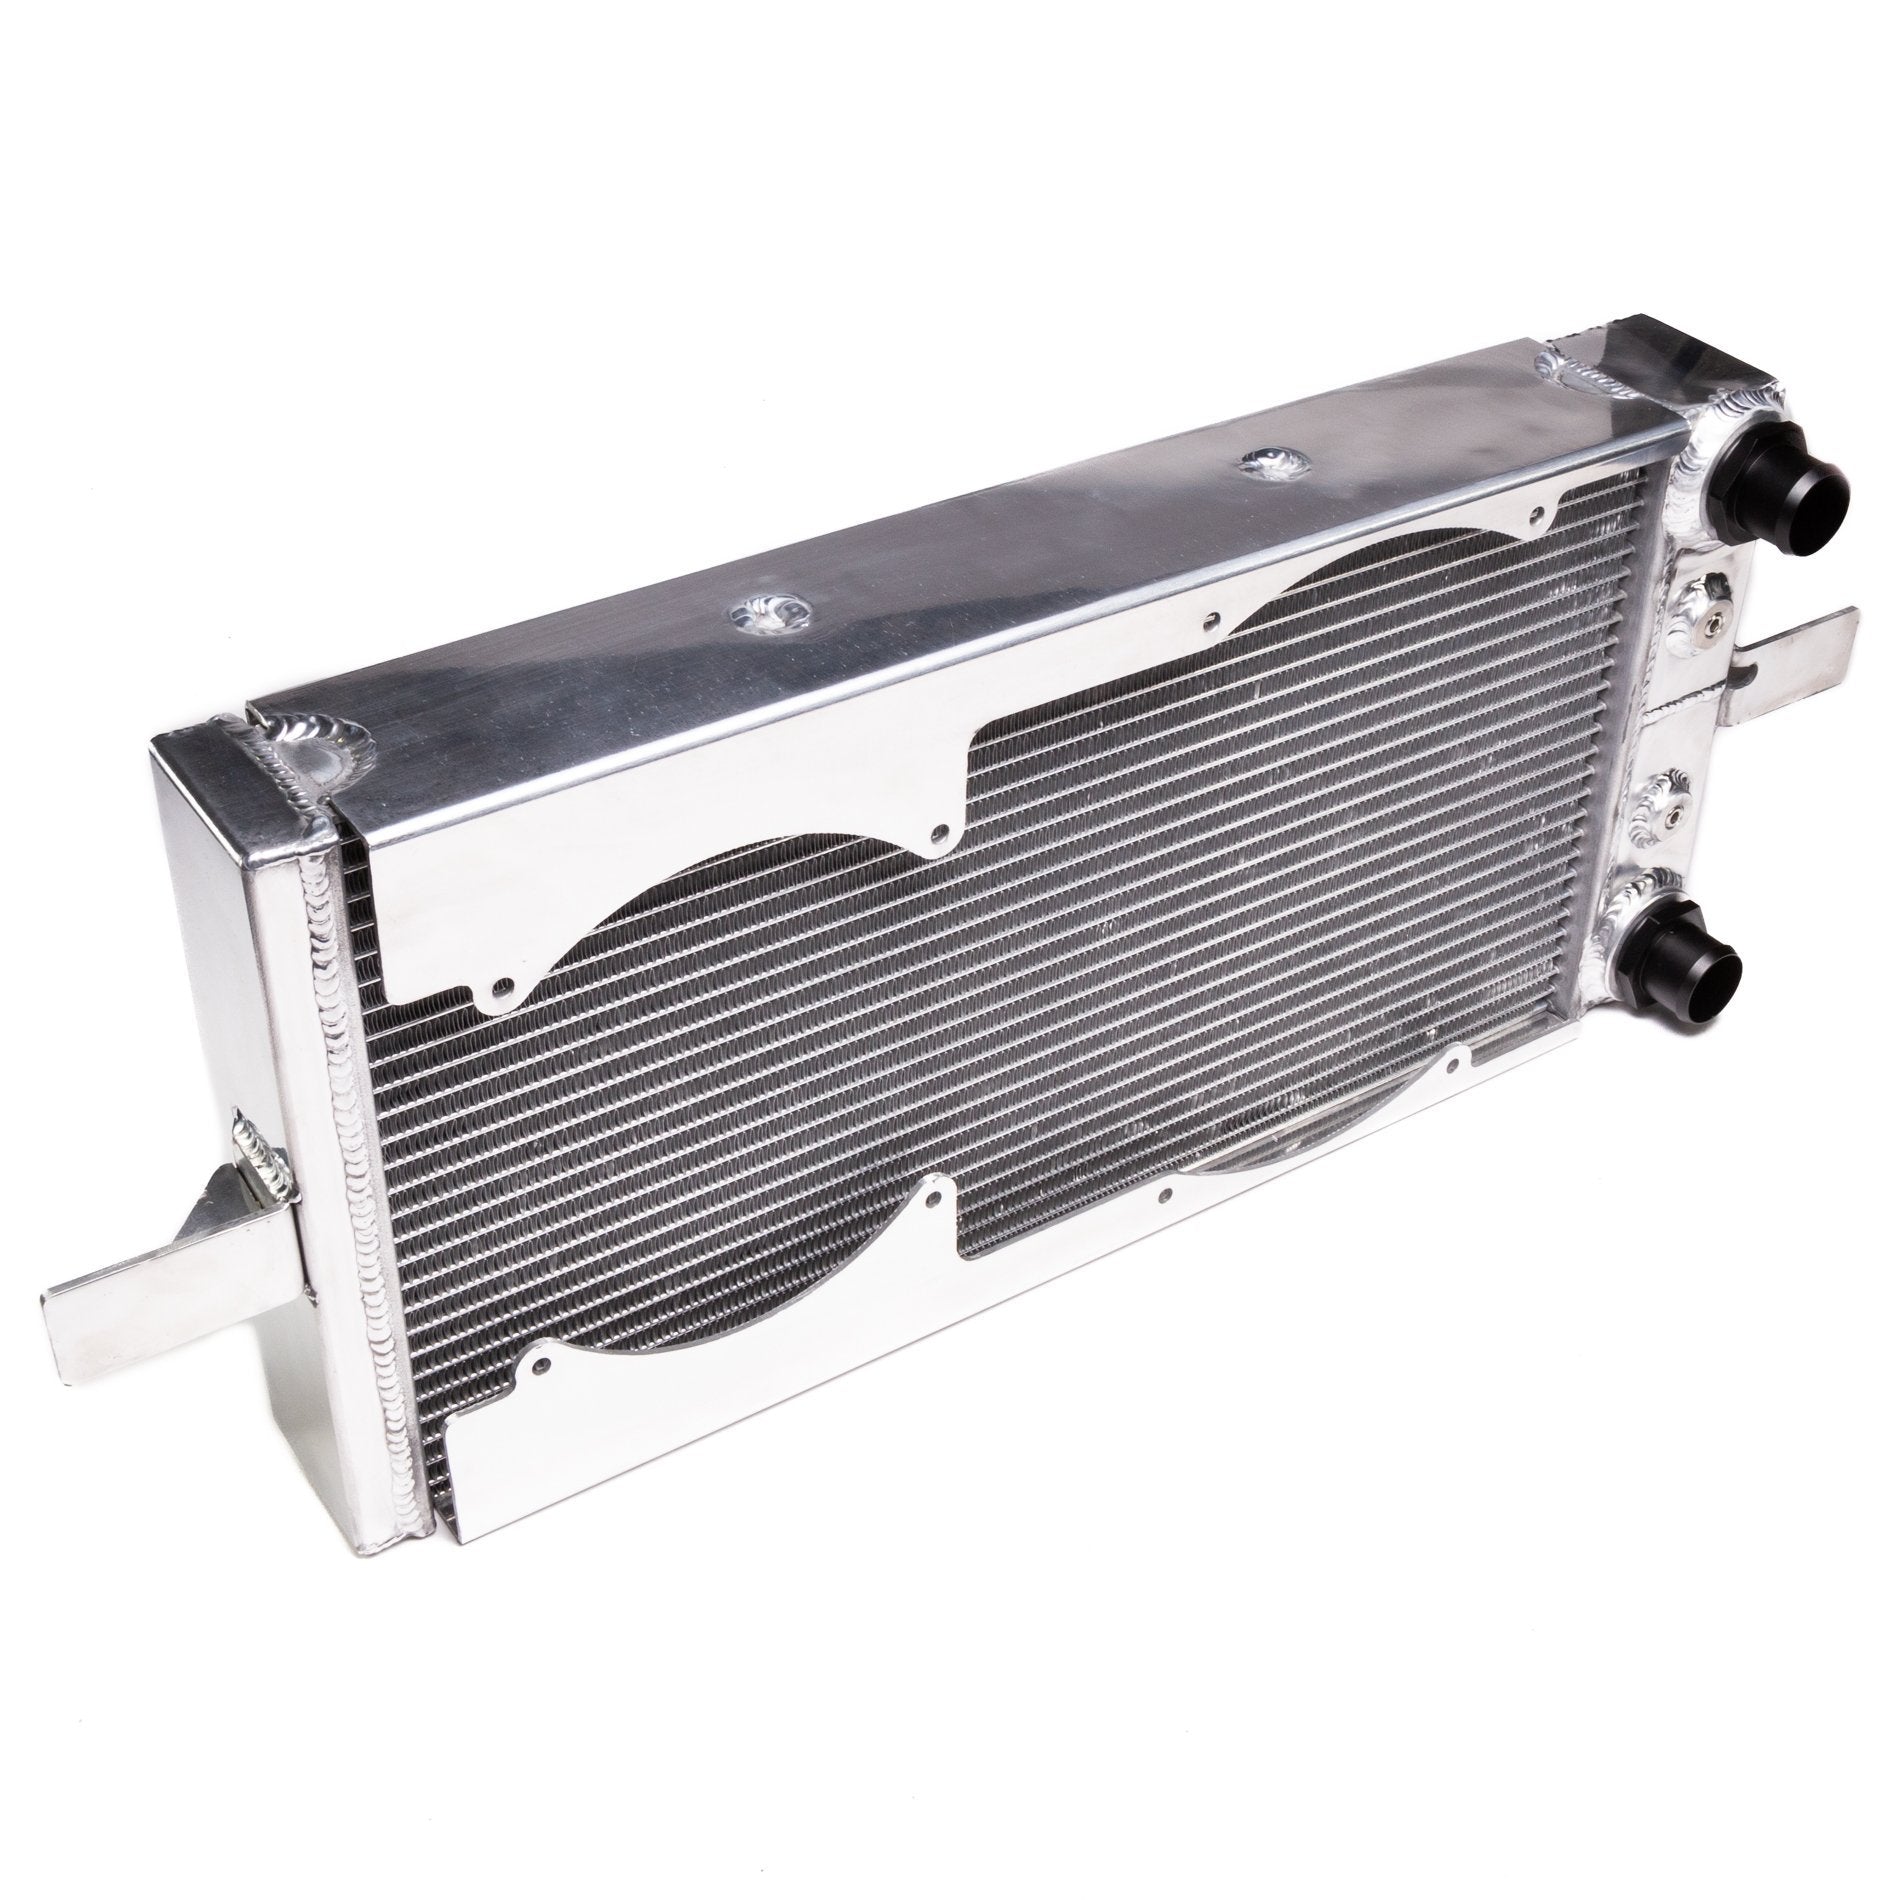 CHASE BAYS Honda Civic Aluminum Radiator - PARTS33 GmbH